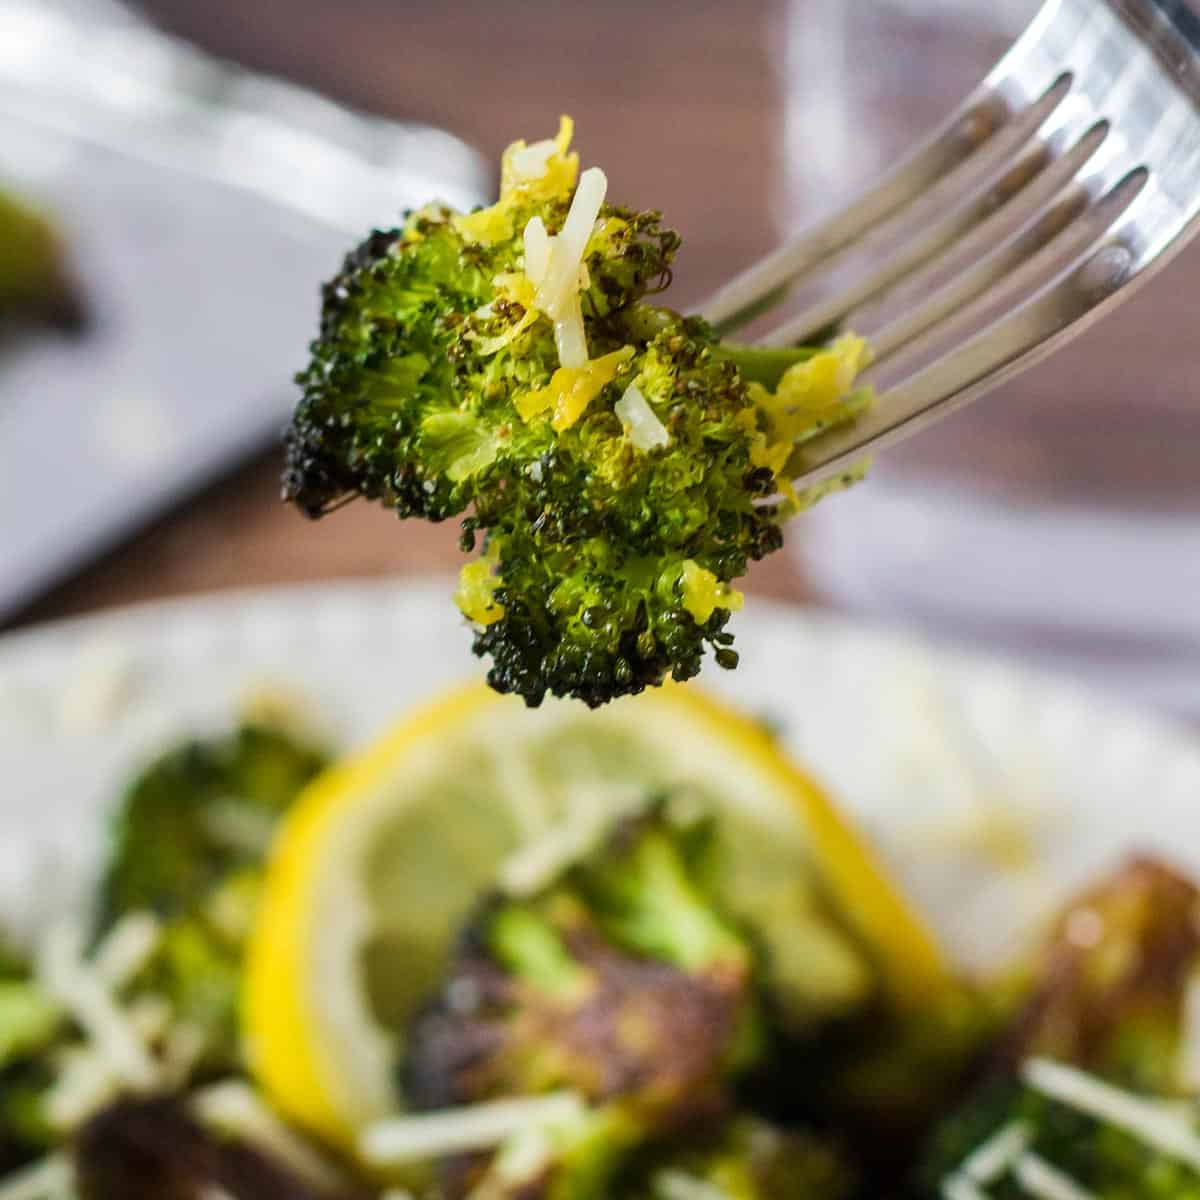 A piece of broccoli on a fork.